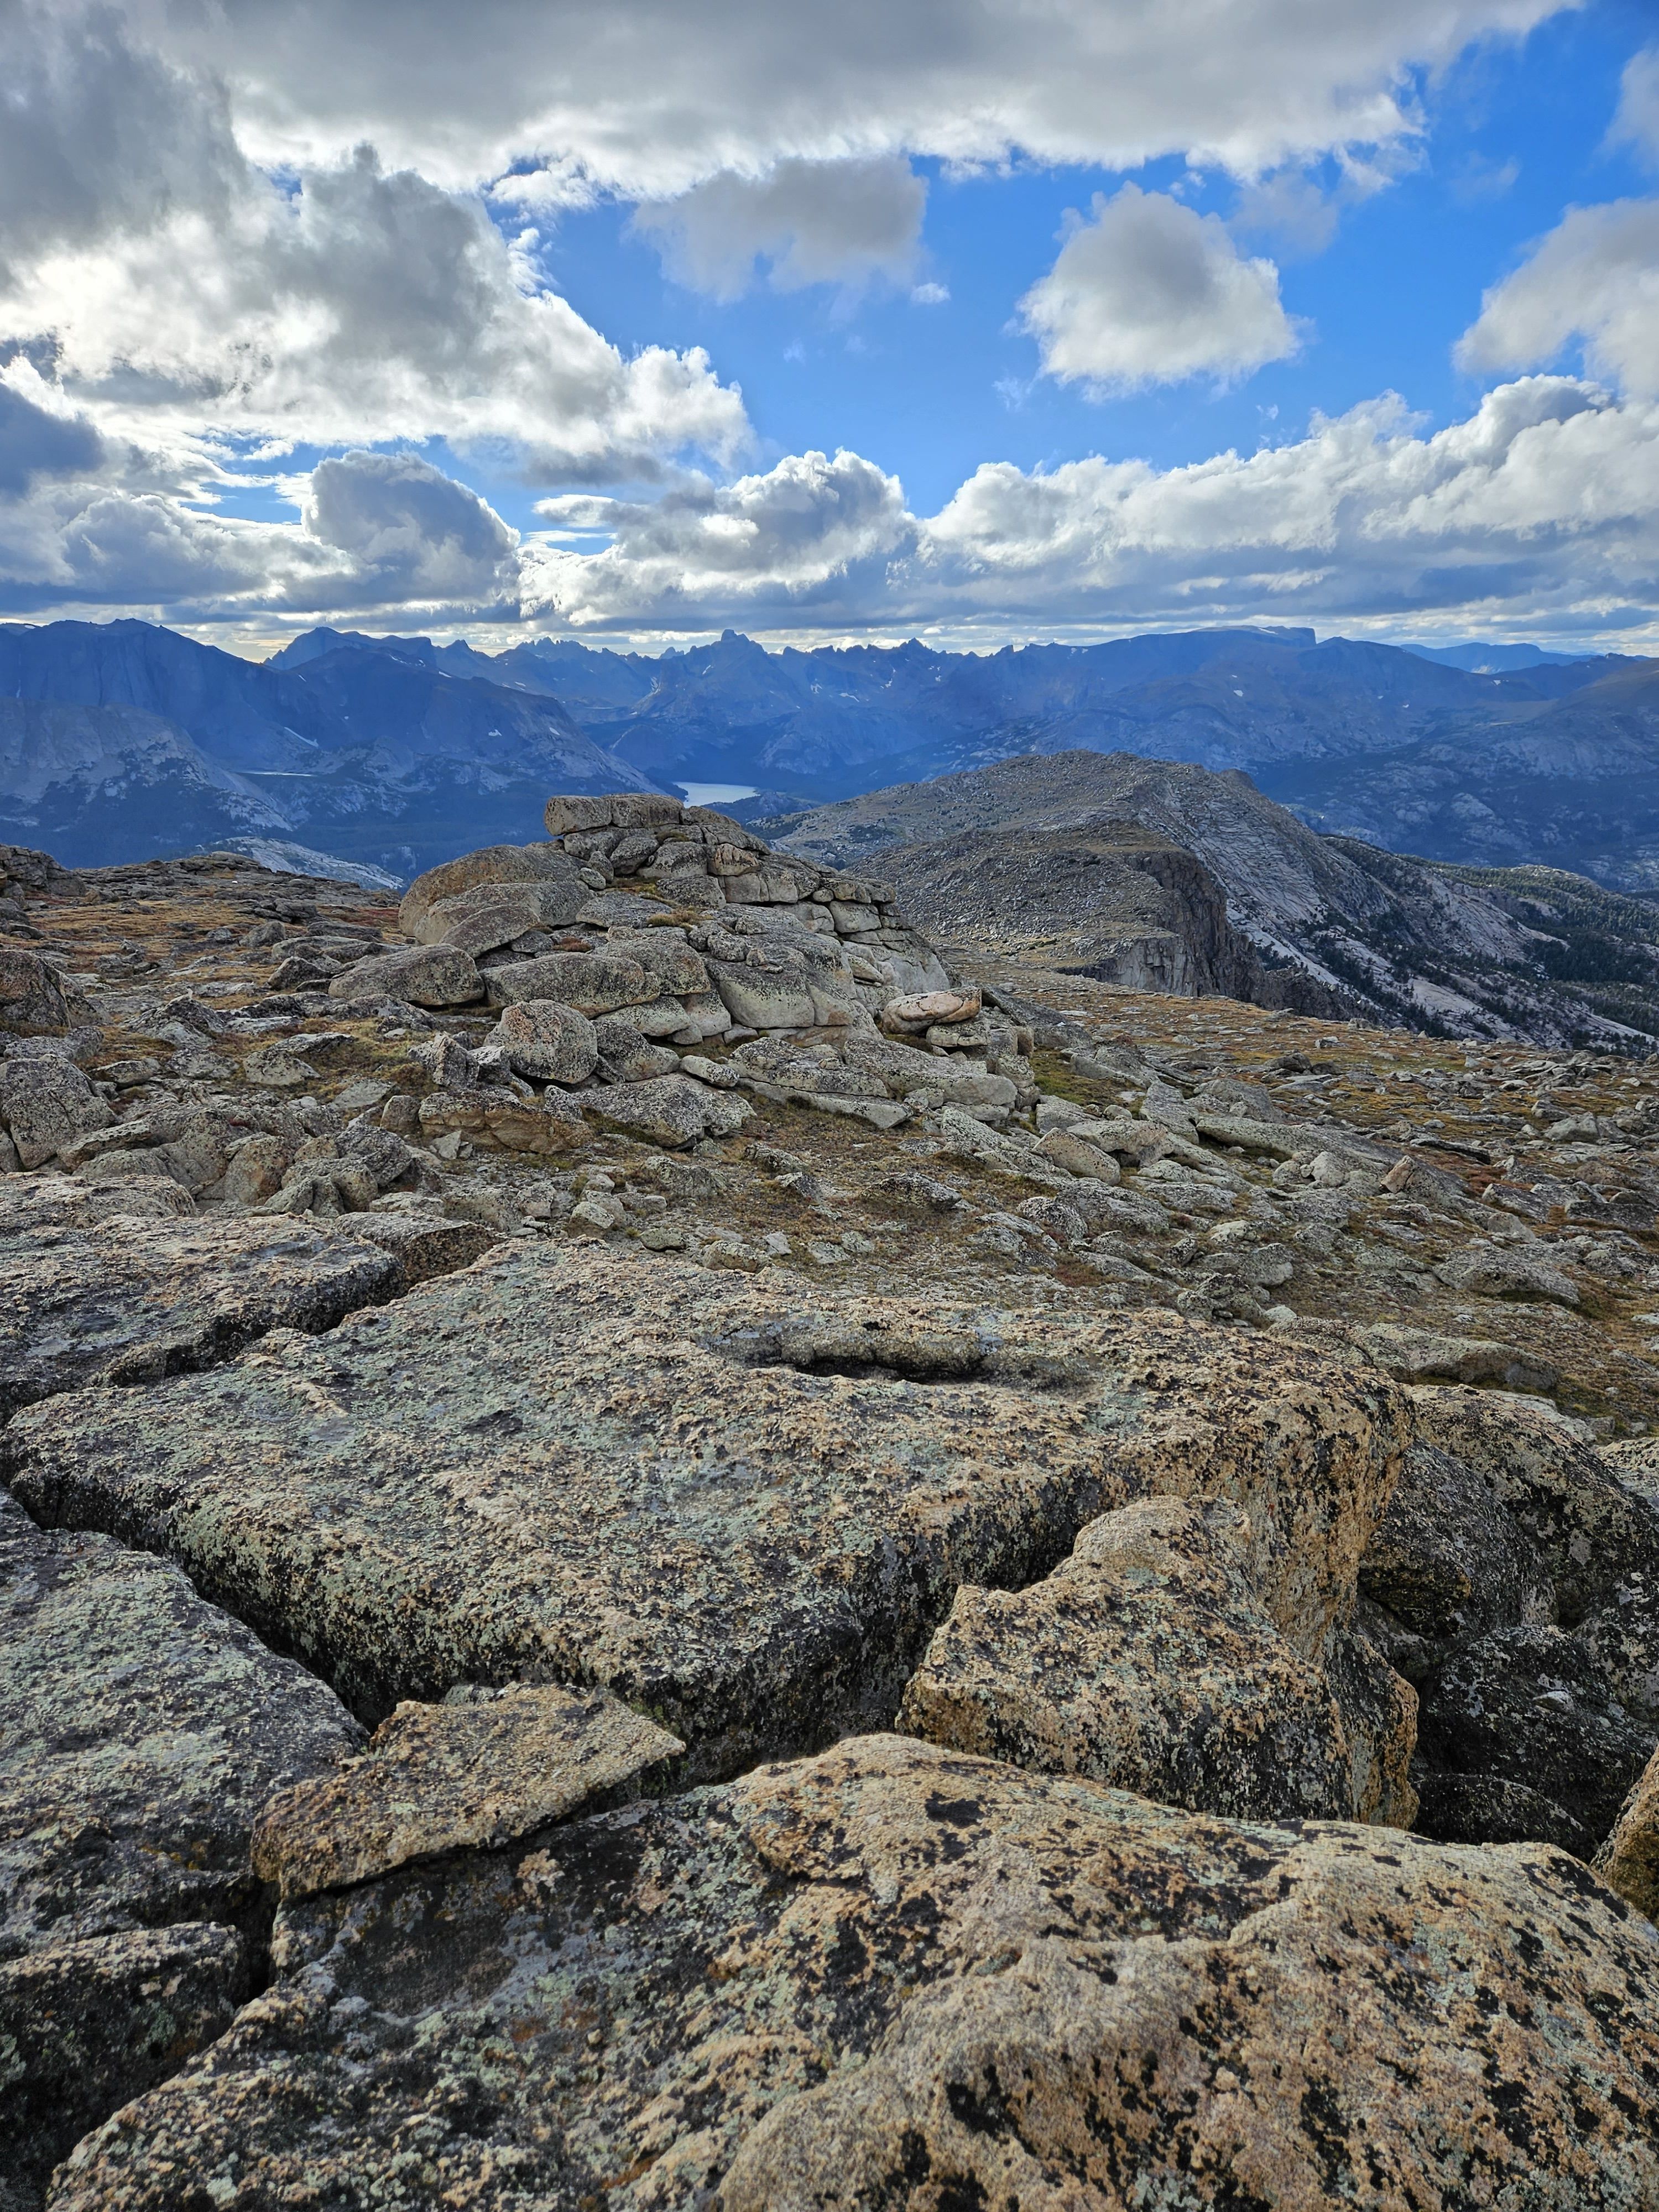 A rocky mountain scene